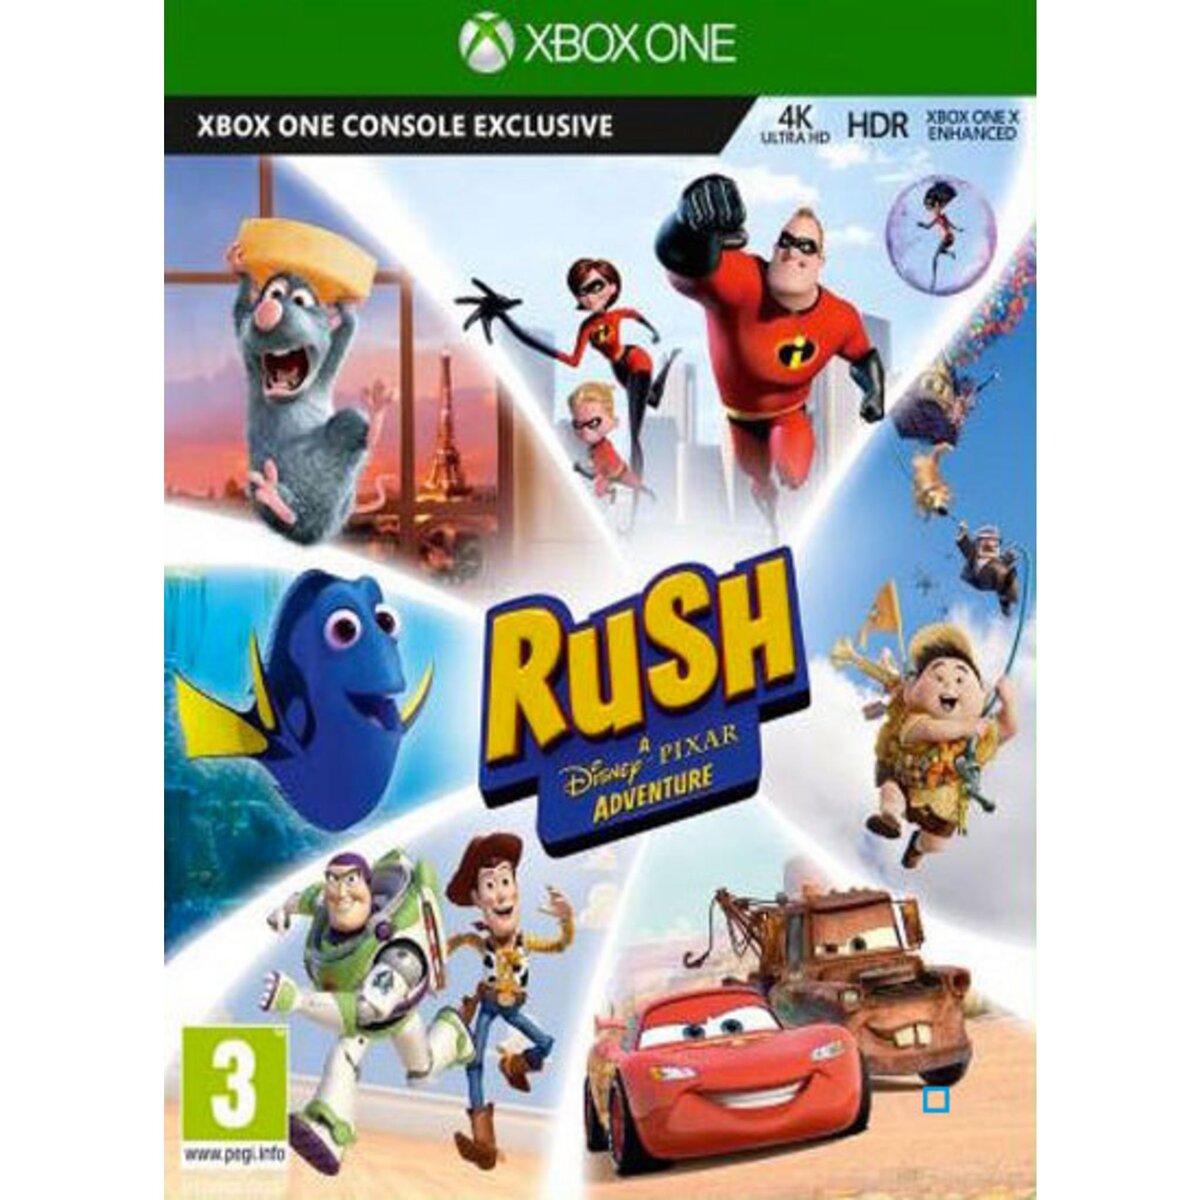 Rush: A Disney Pixar Adventure XBOX ONE